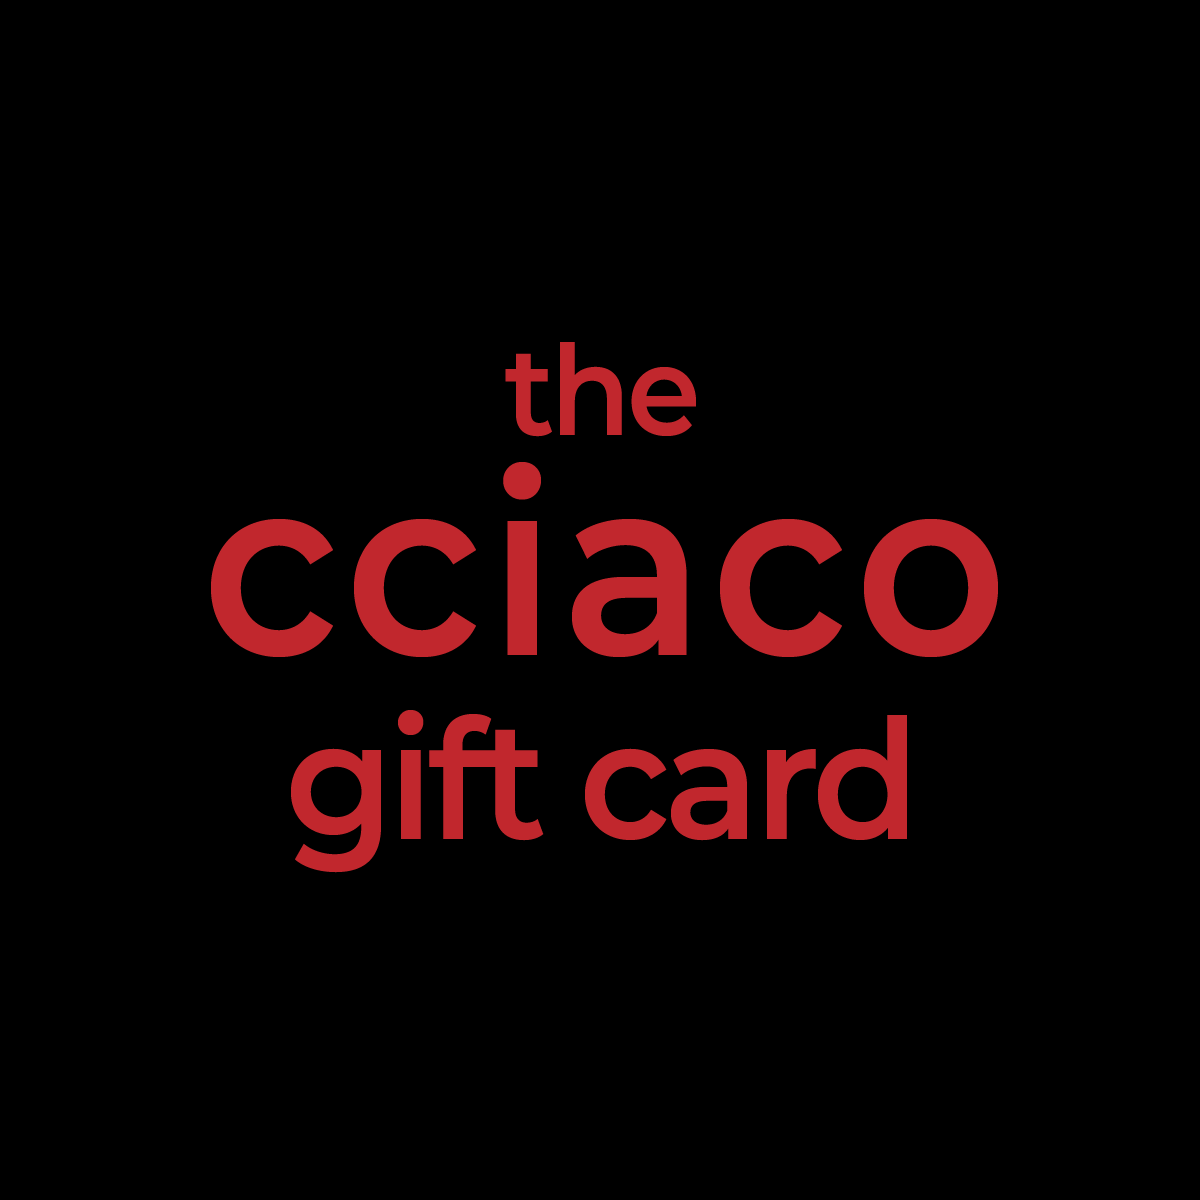 cciaco gift card